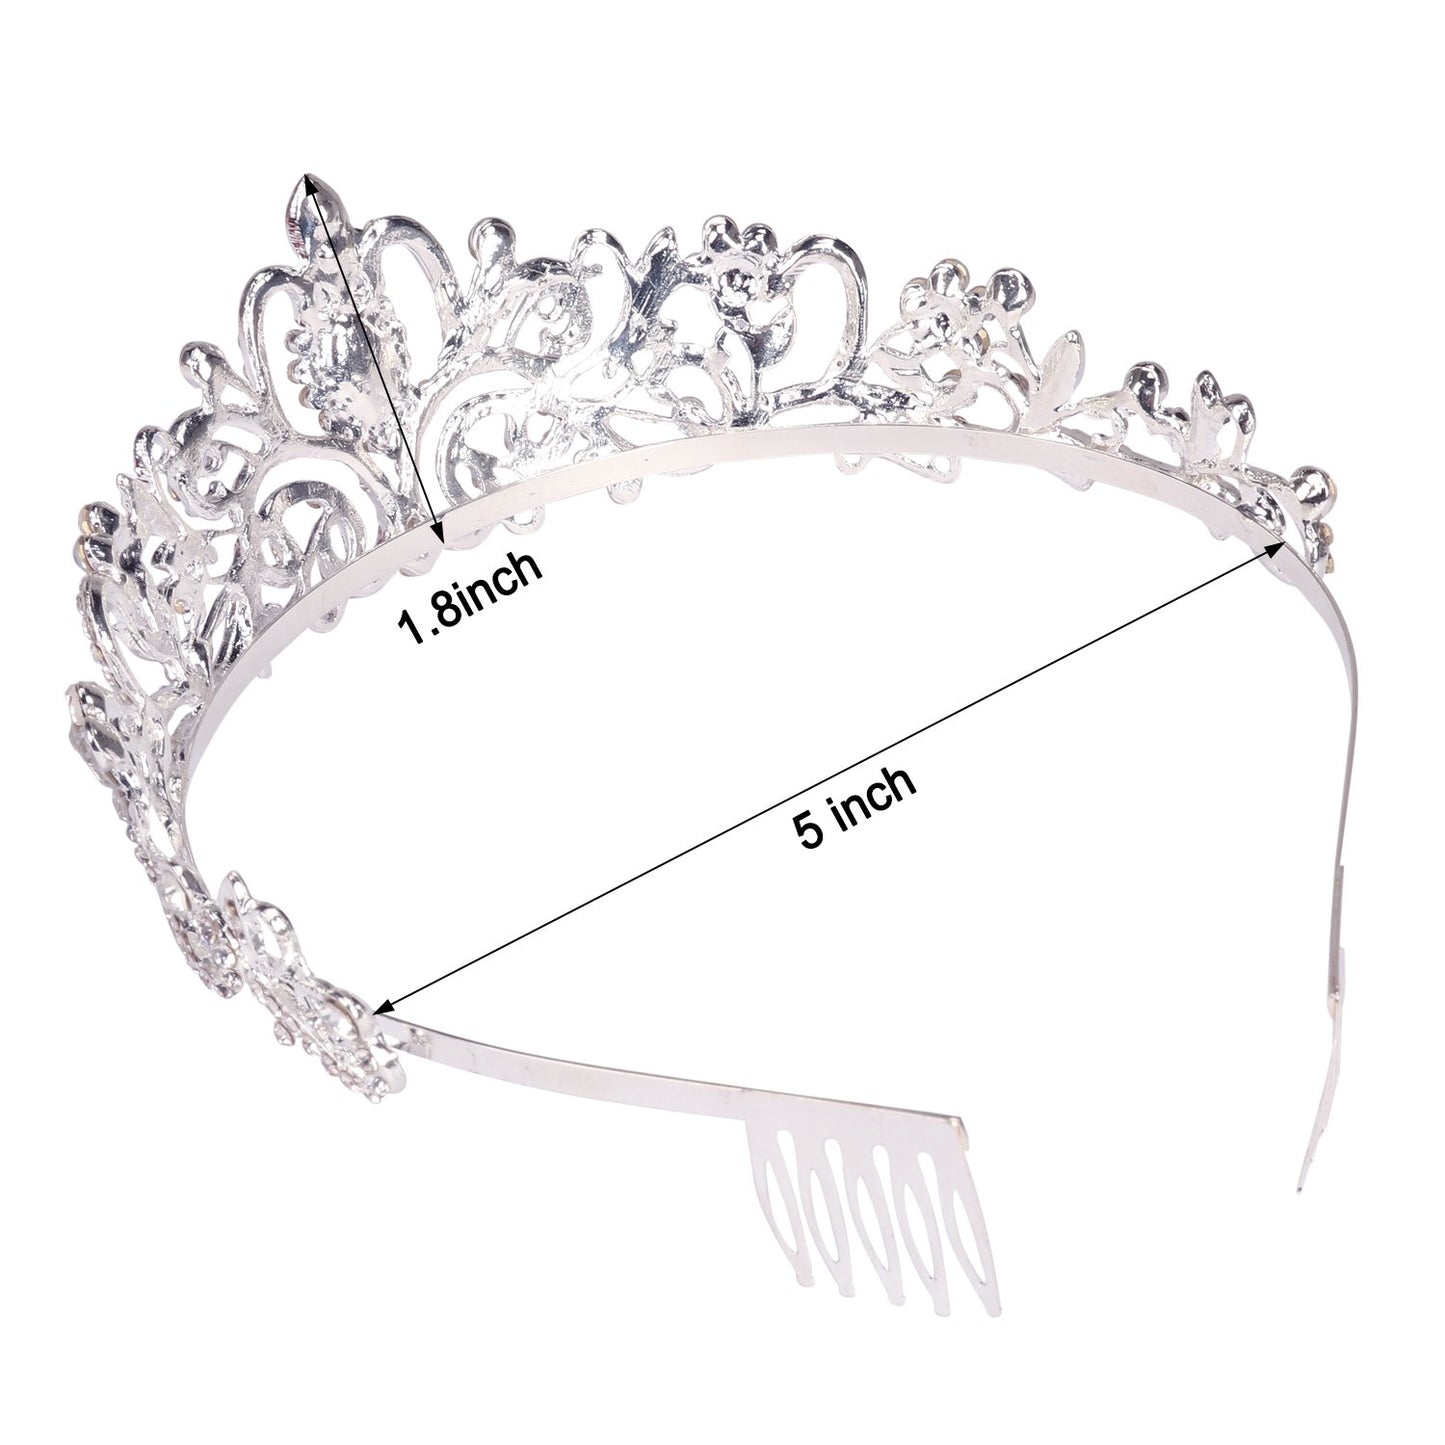 Didder Silver Crystal Tiara Crown Headband Princess Elegant Crown with combs for Women Girls Bridal Wedding Prom Birthday Party